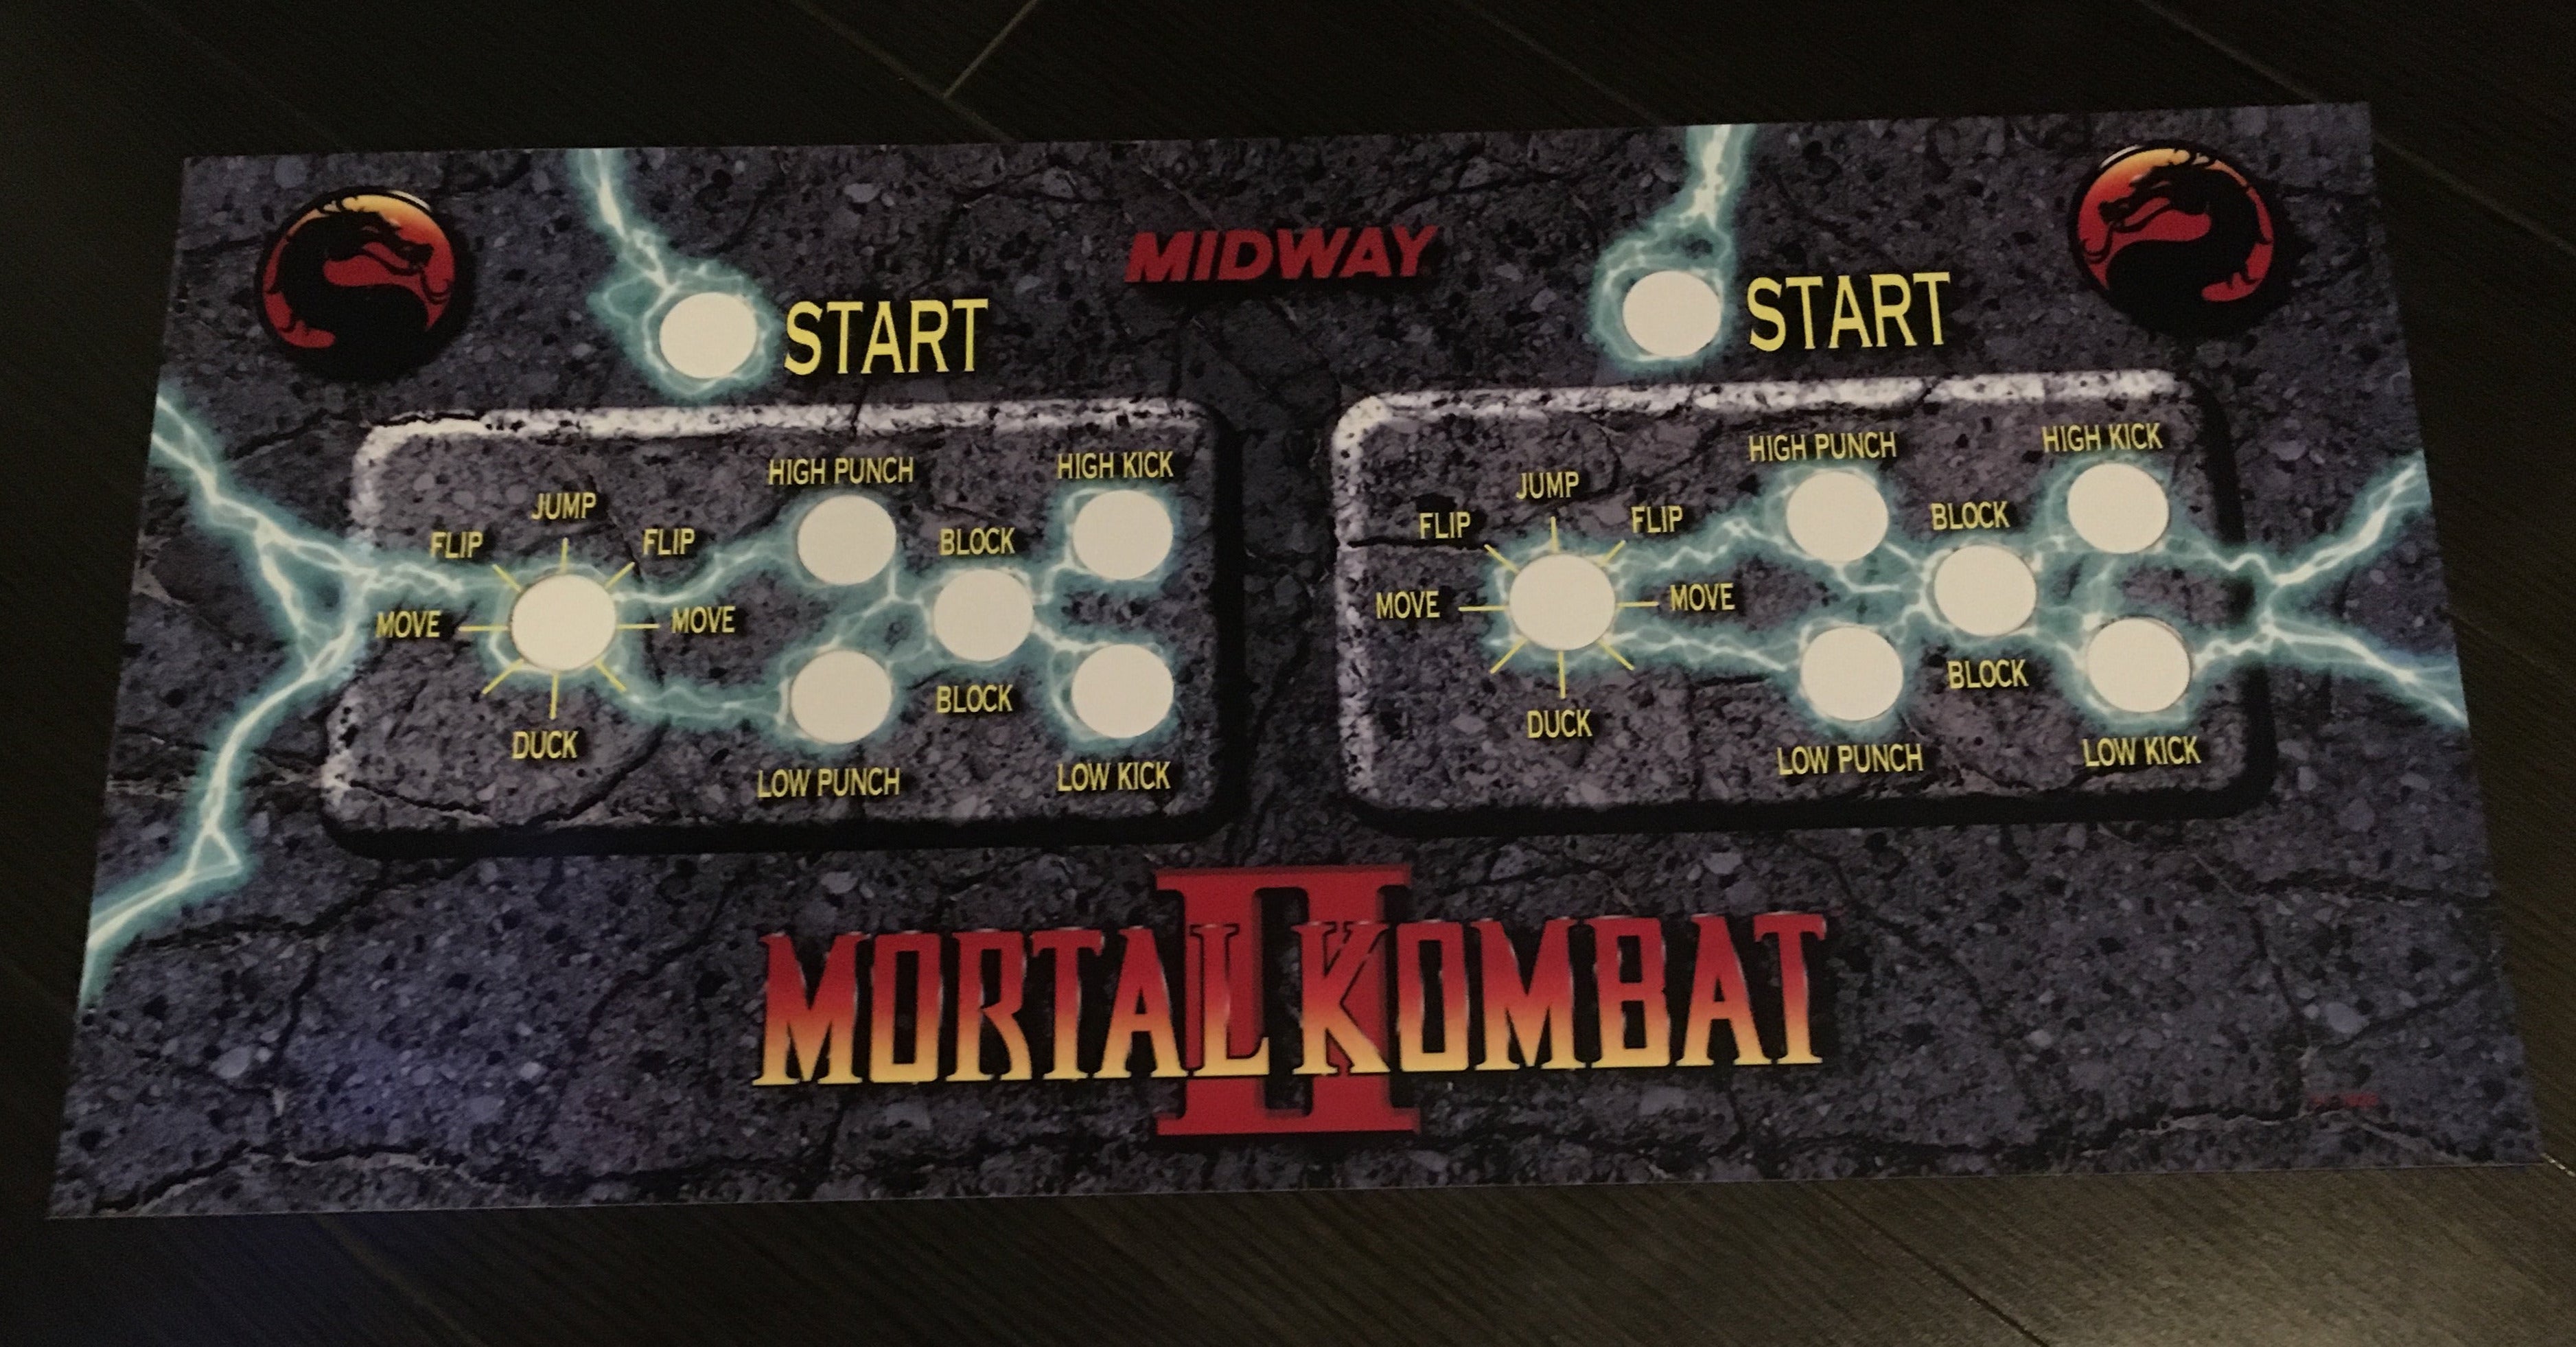 Mortal Kombat 2 CPO